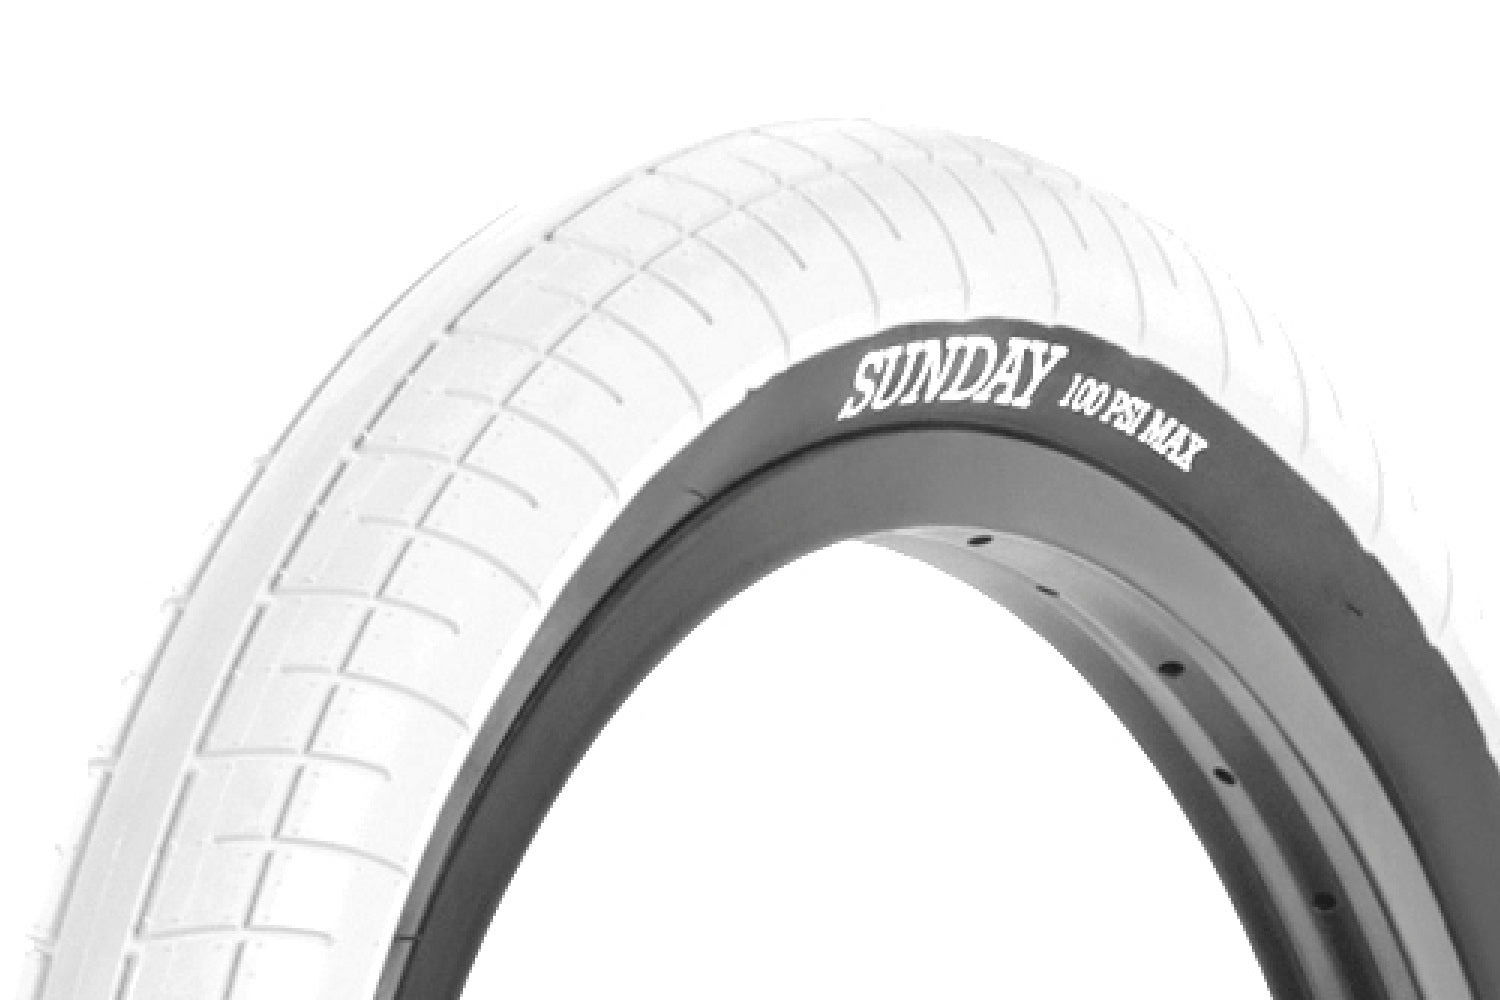 sunday bmx tires